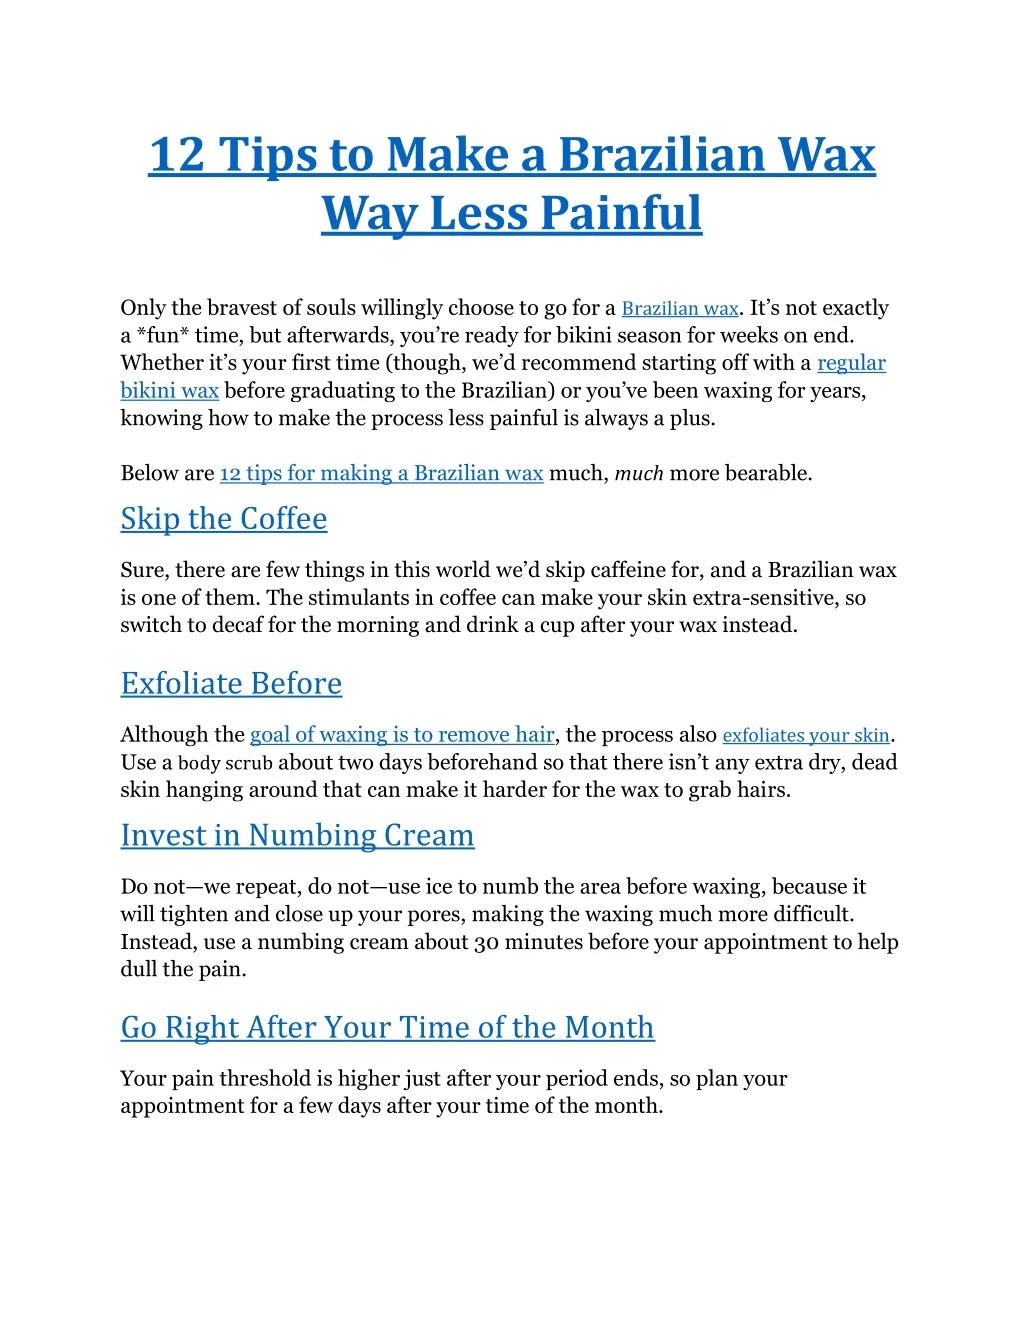 12 tips to make a brazilian wax way less painful